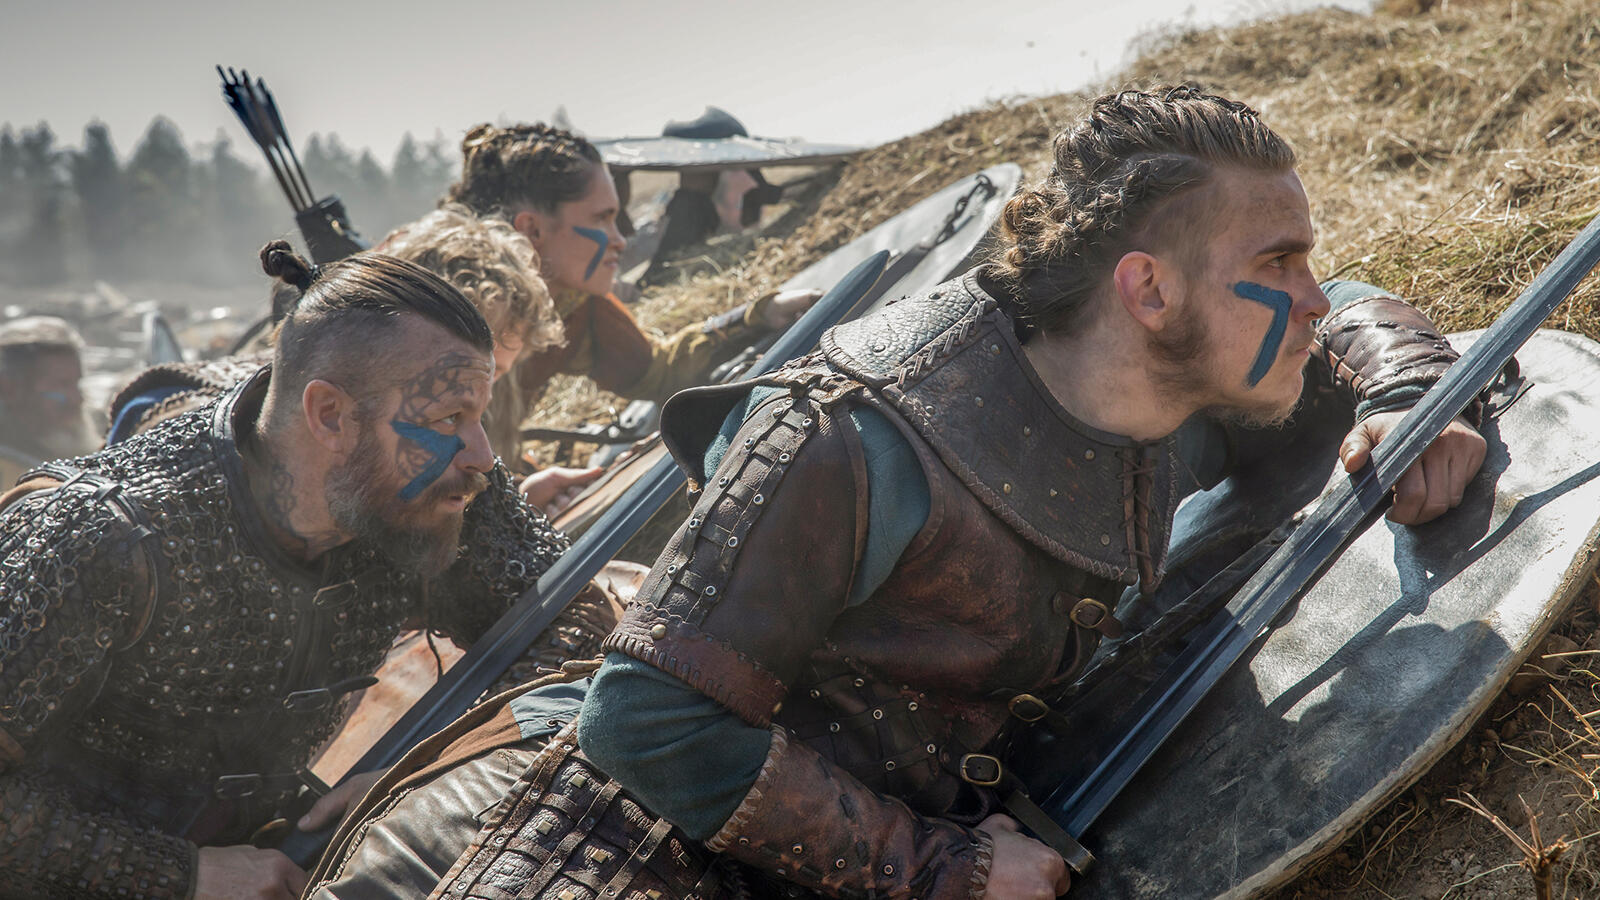 Vikings: Valhalla season 1 - who is King Canute?